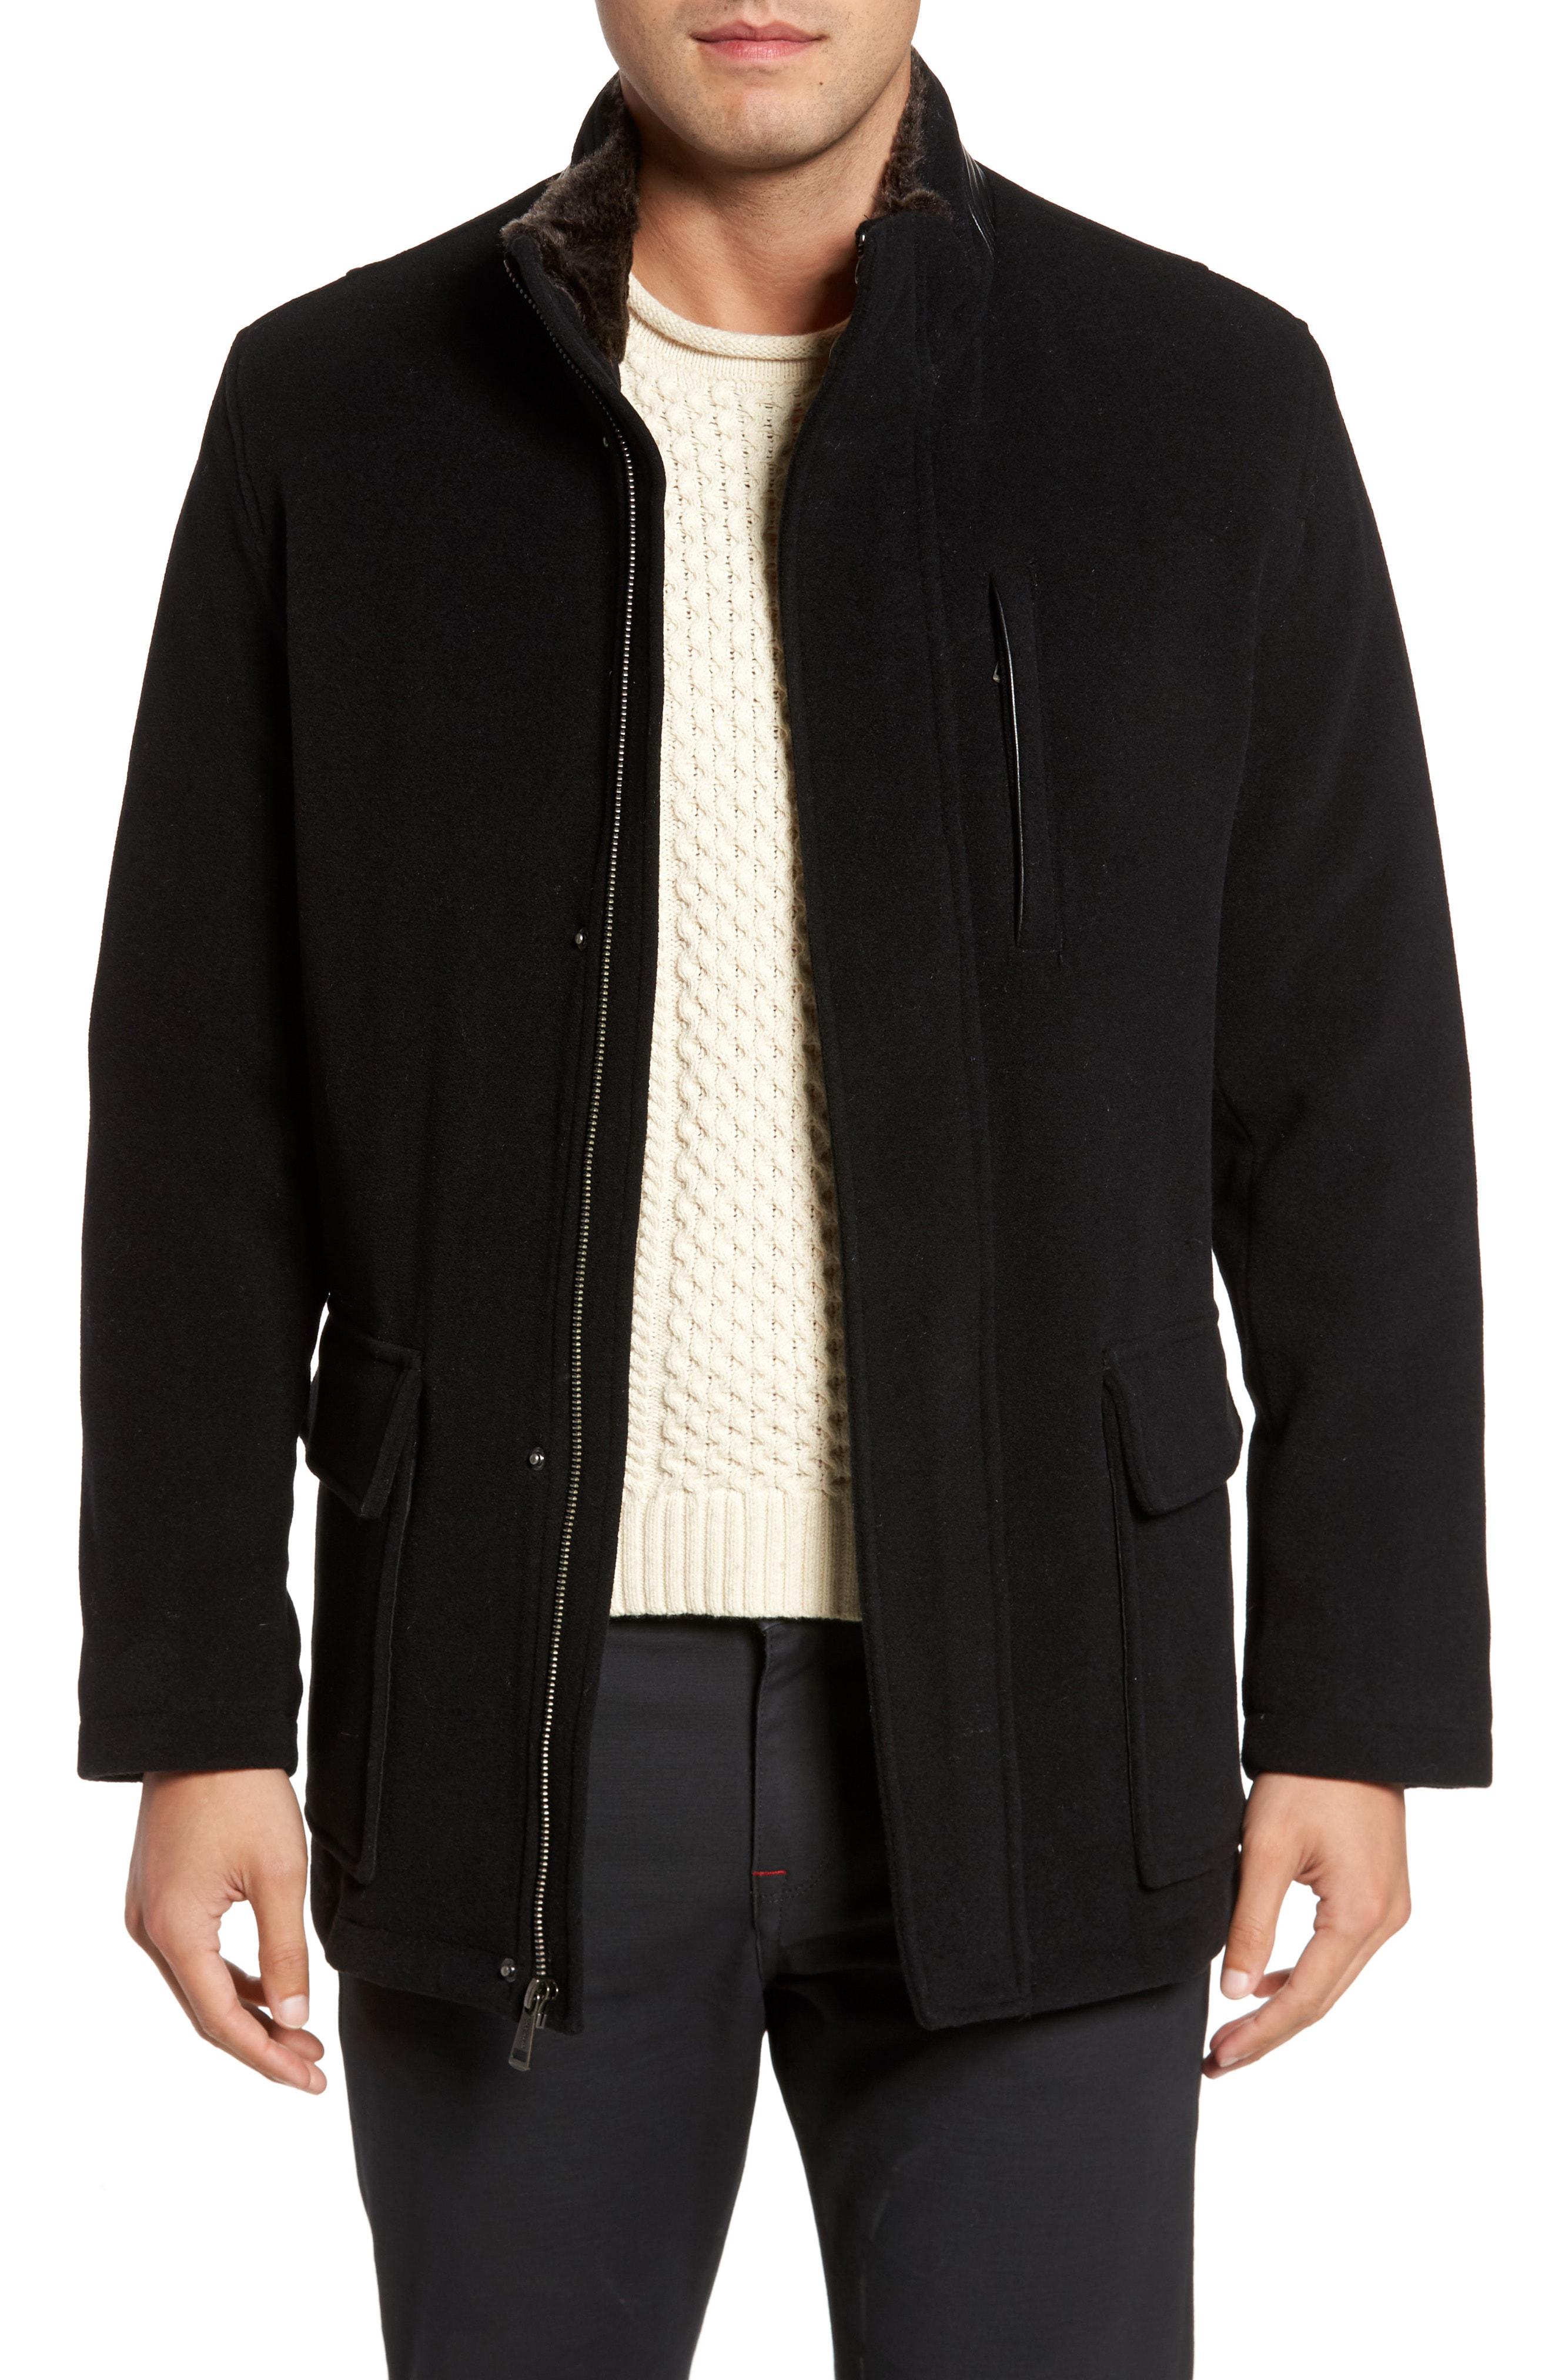 Cole Haan Faux Fur Collar Wool Blend Parka in Black for Men - Lyst